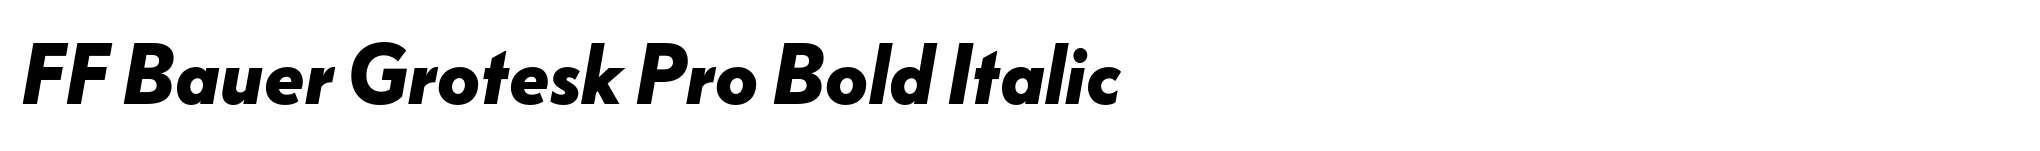 FF Bauer Grotesk Pro Bold Italic image